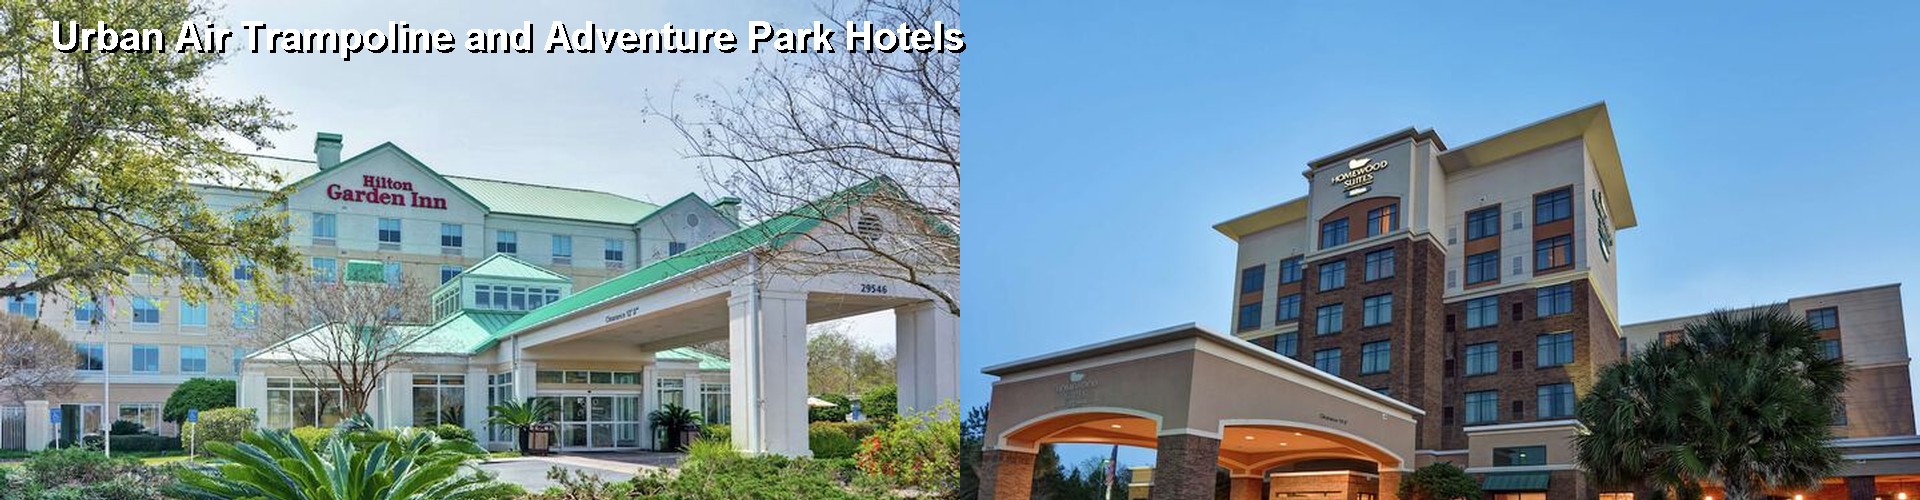 5 Best Hotels near Urban Air Trampoline and Adventure Park